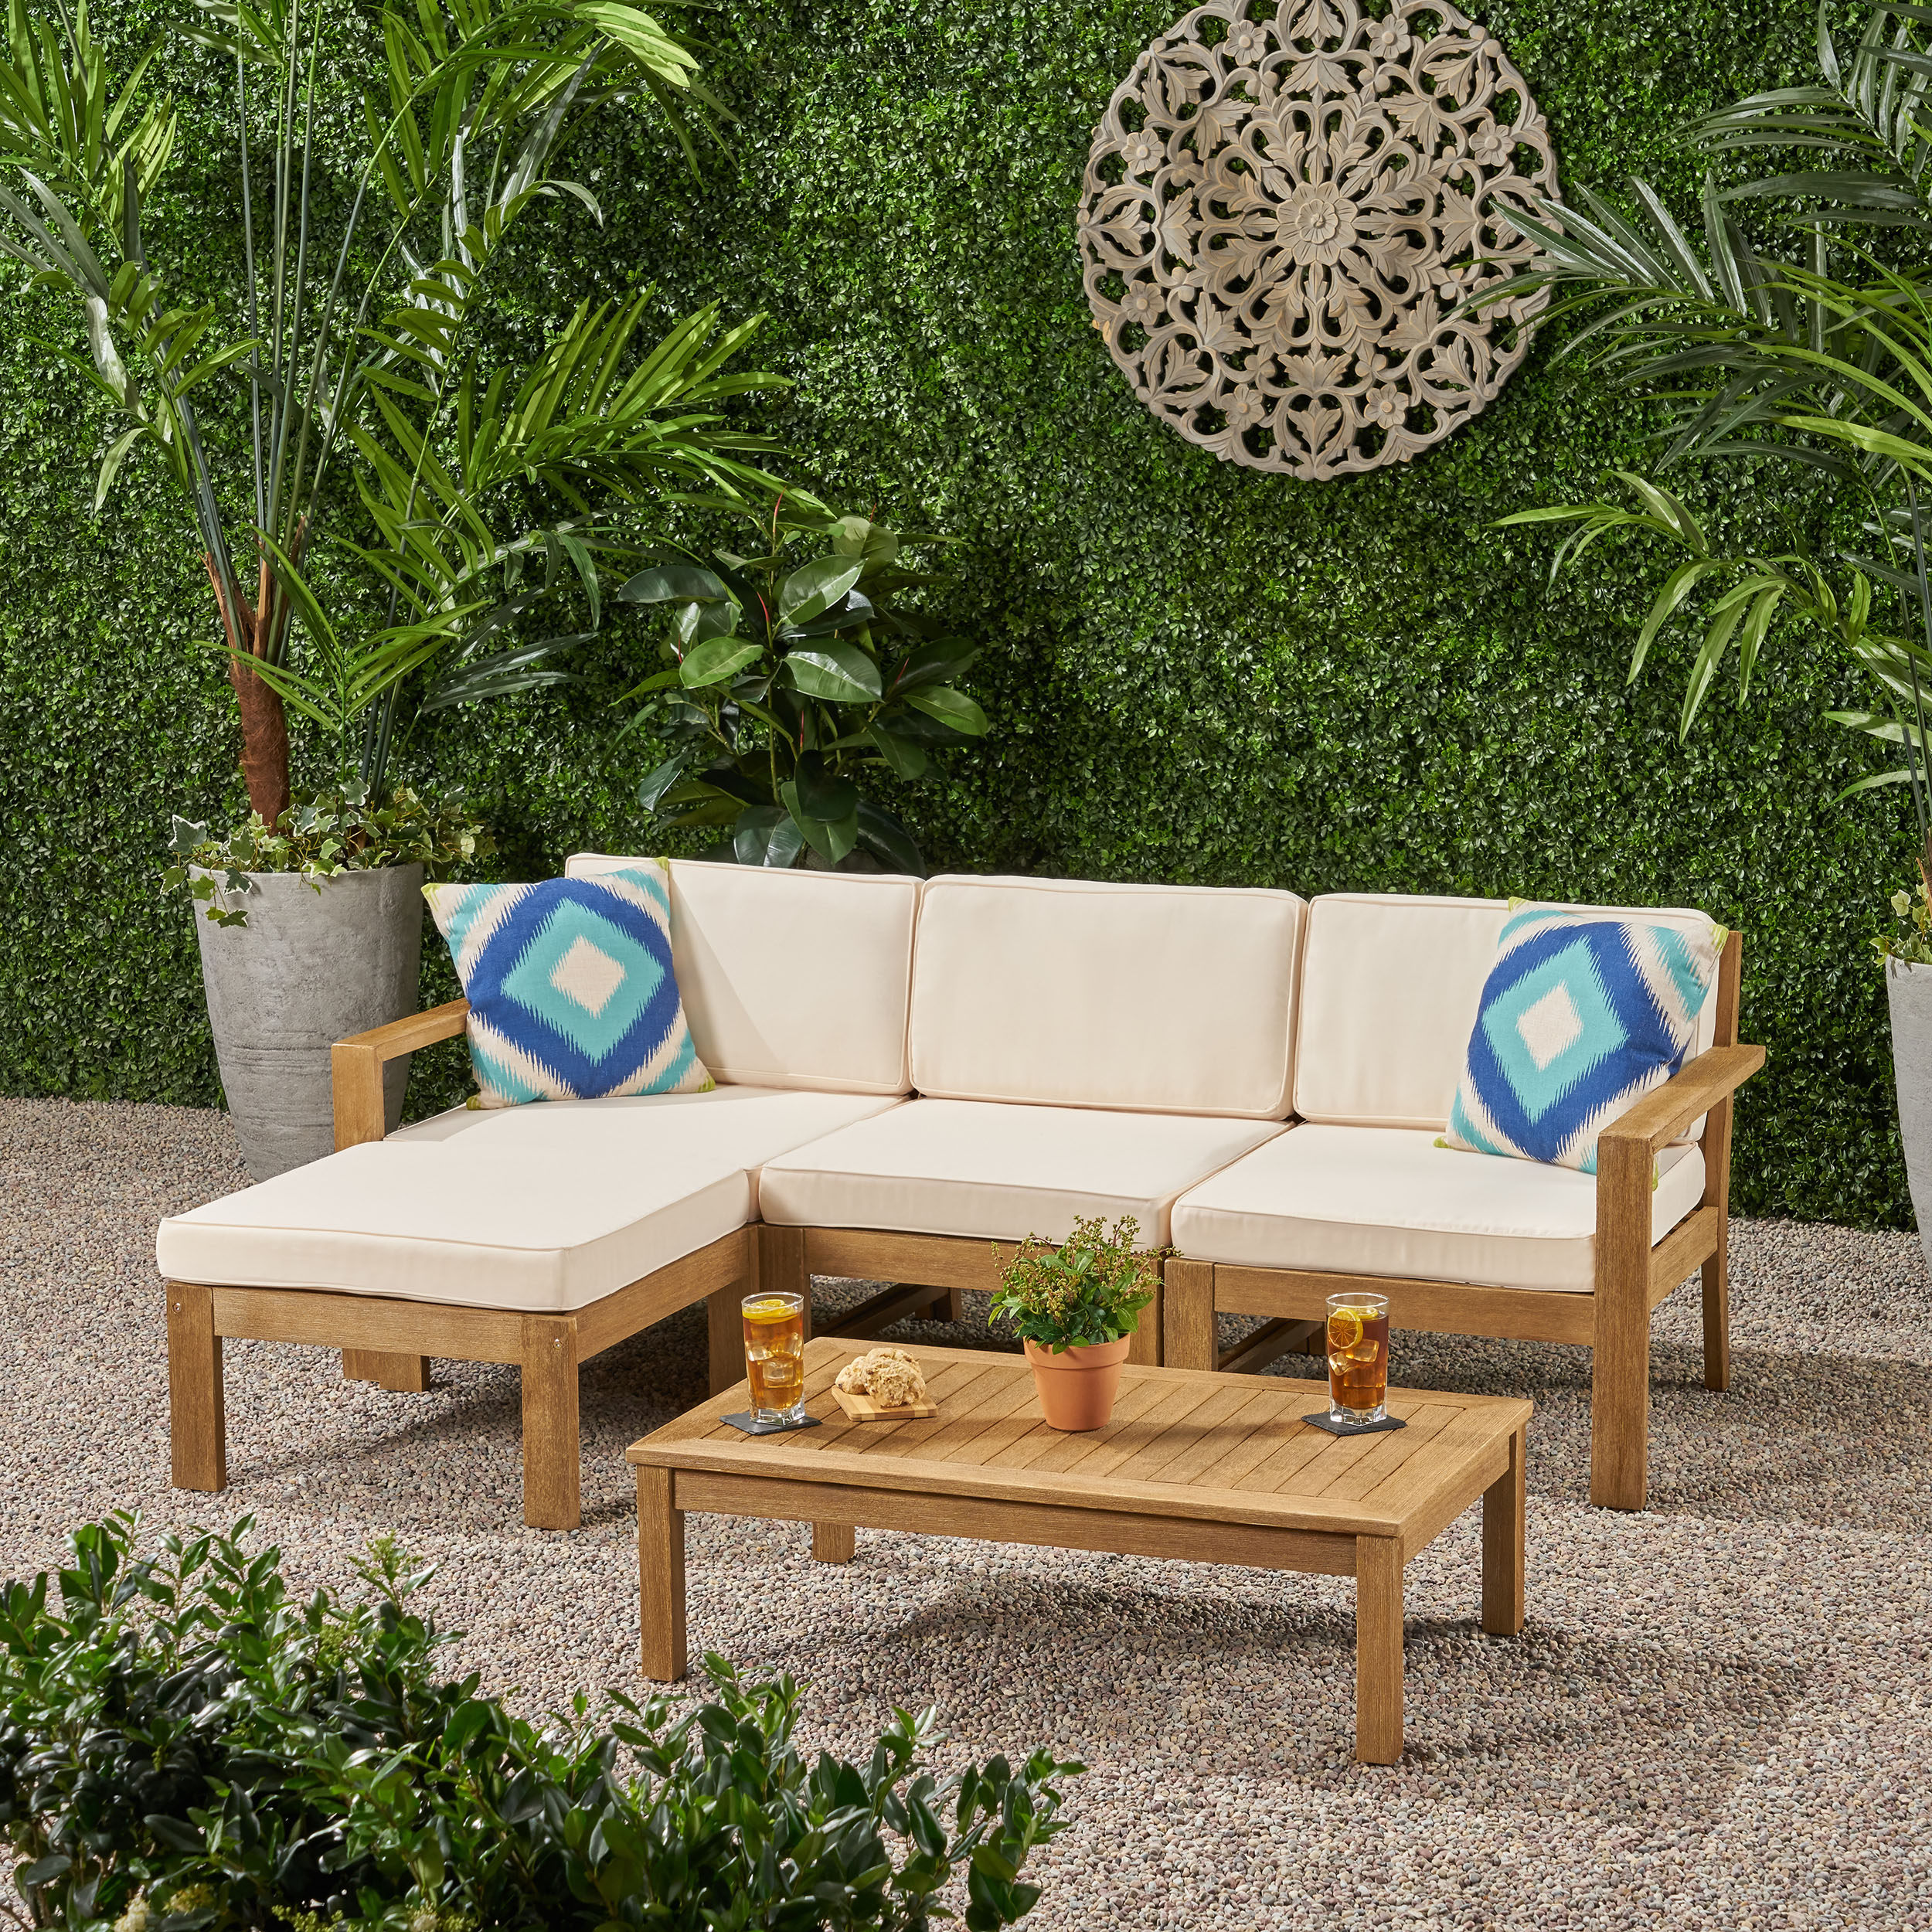 GDF Studio Makayla Outdoor 3 Seater Acacia Wood Sofa Sectional, Light Brown and Cream - image 2 of 10